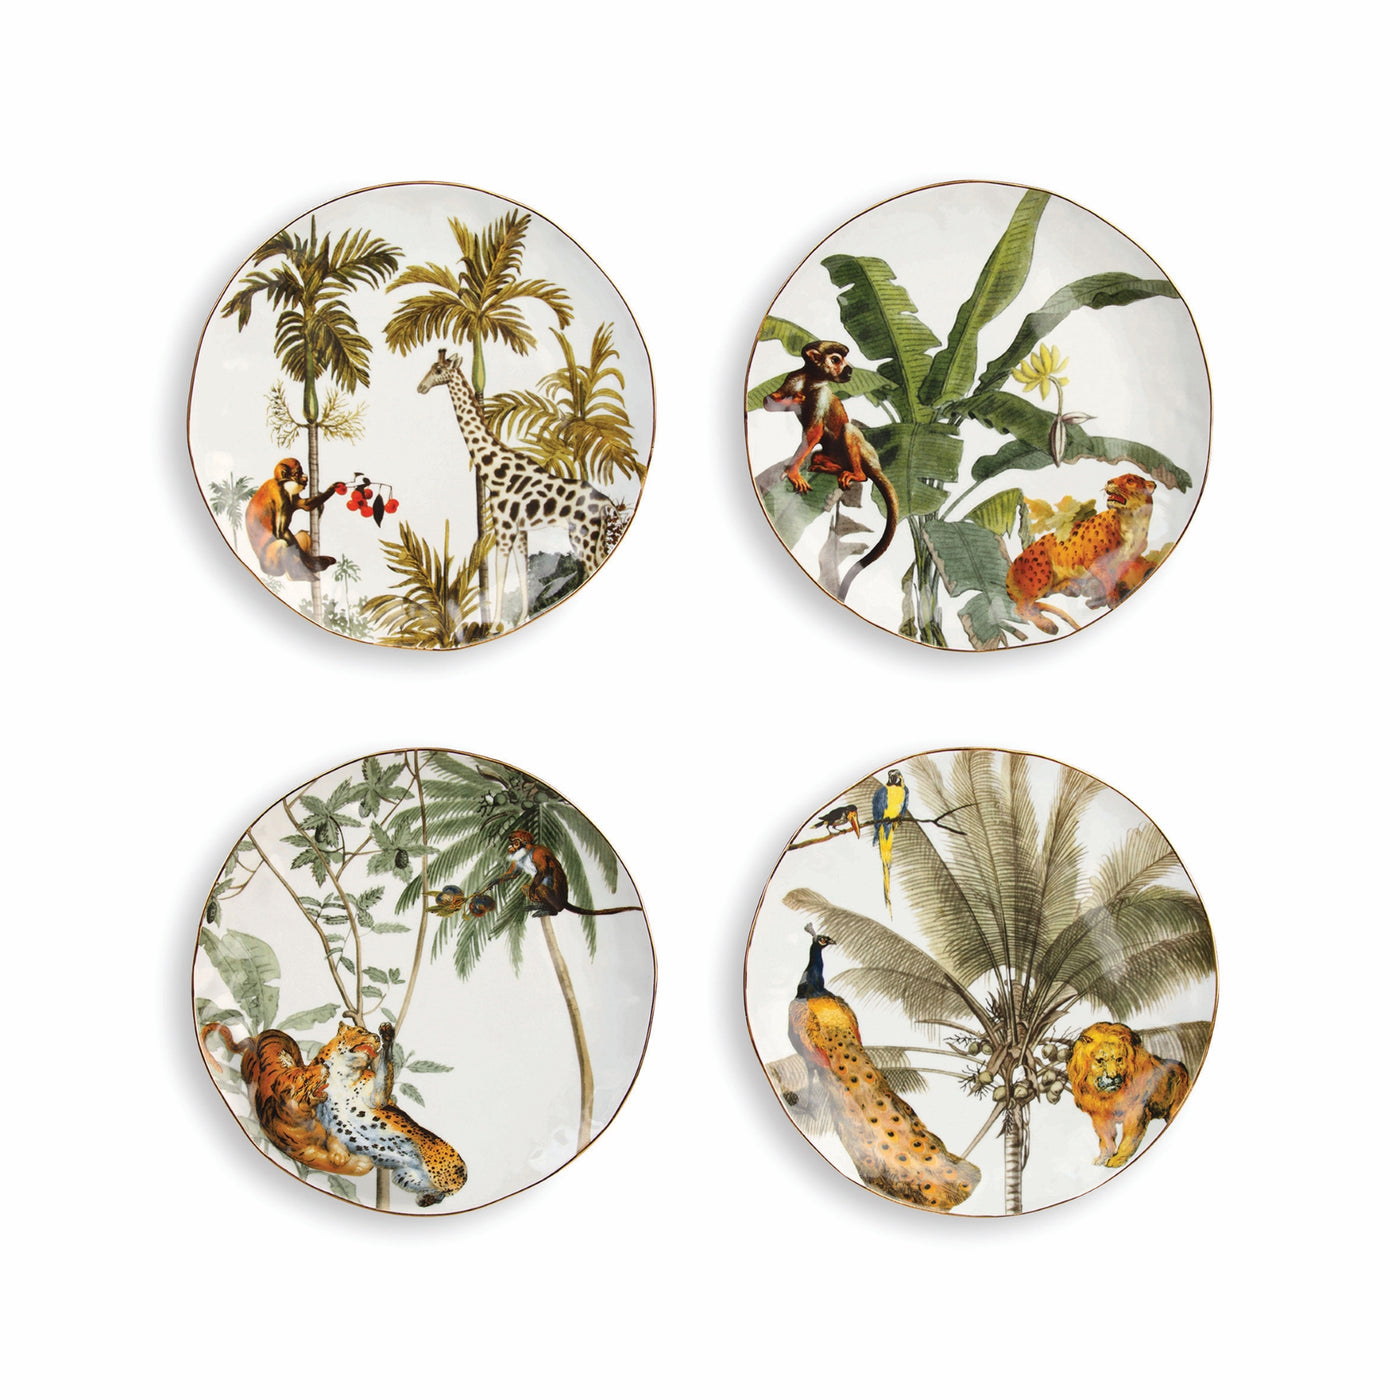 &-Klevering-white-Jungle-Plates-with-Giraffe-Monkey-lion-leopard-design-print-Set-of-4